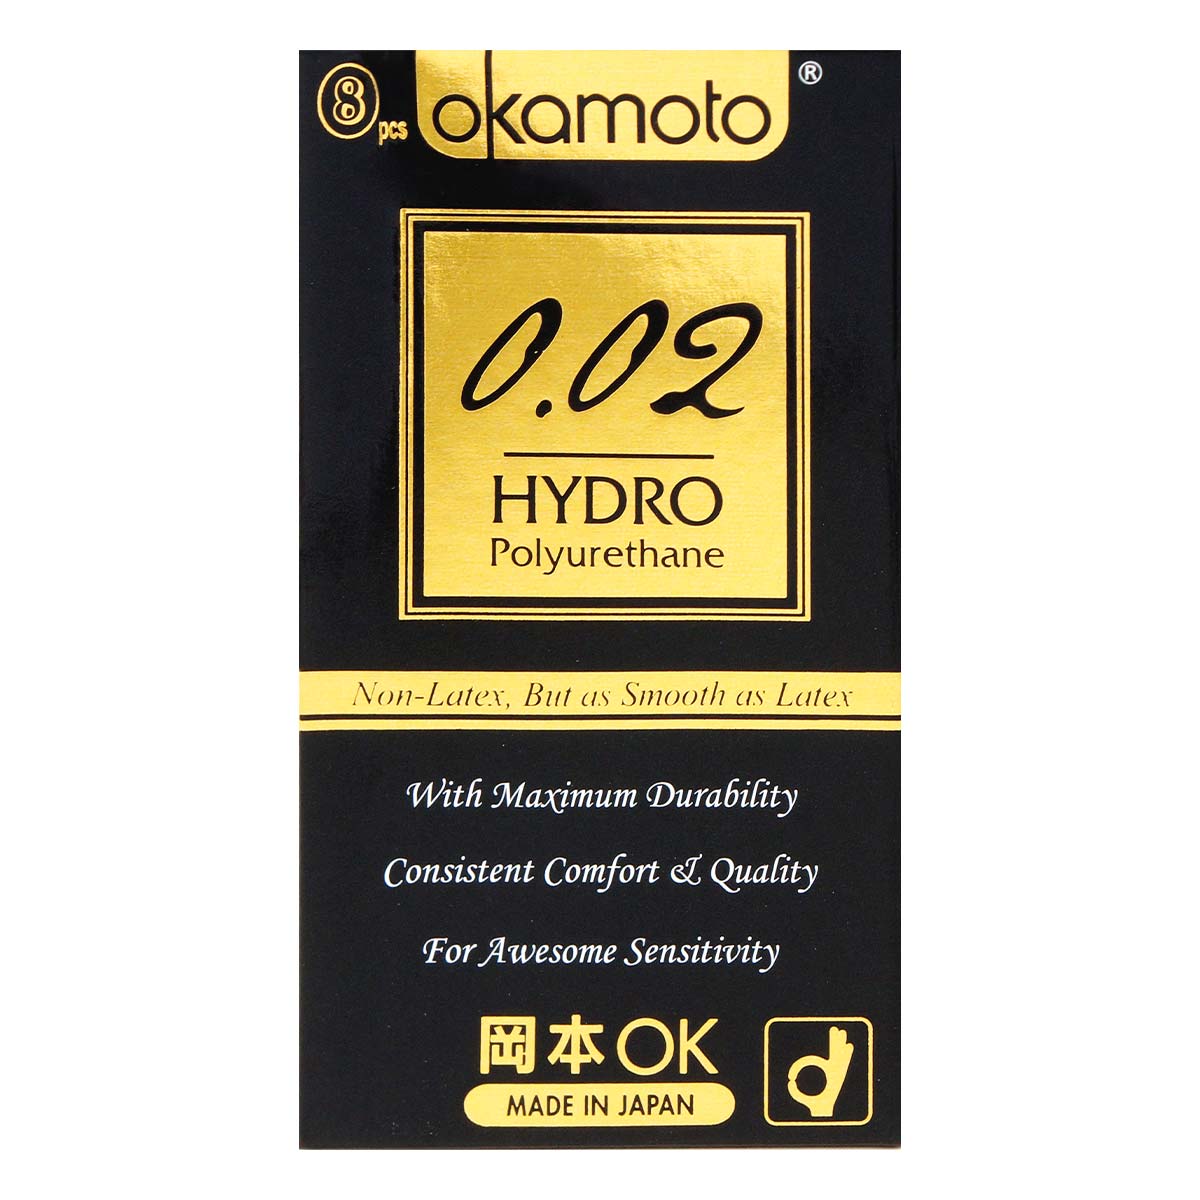 Okamoto 0.02 Hydro Polyurethane Condom 8's Pack PU Condom-p_2